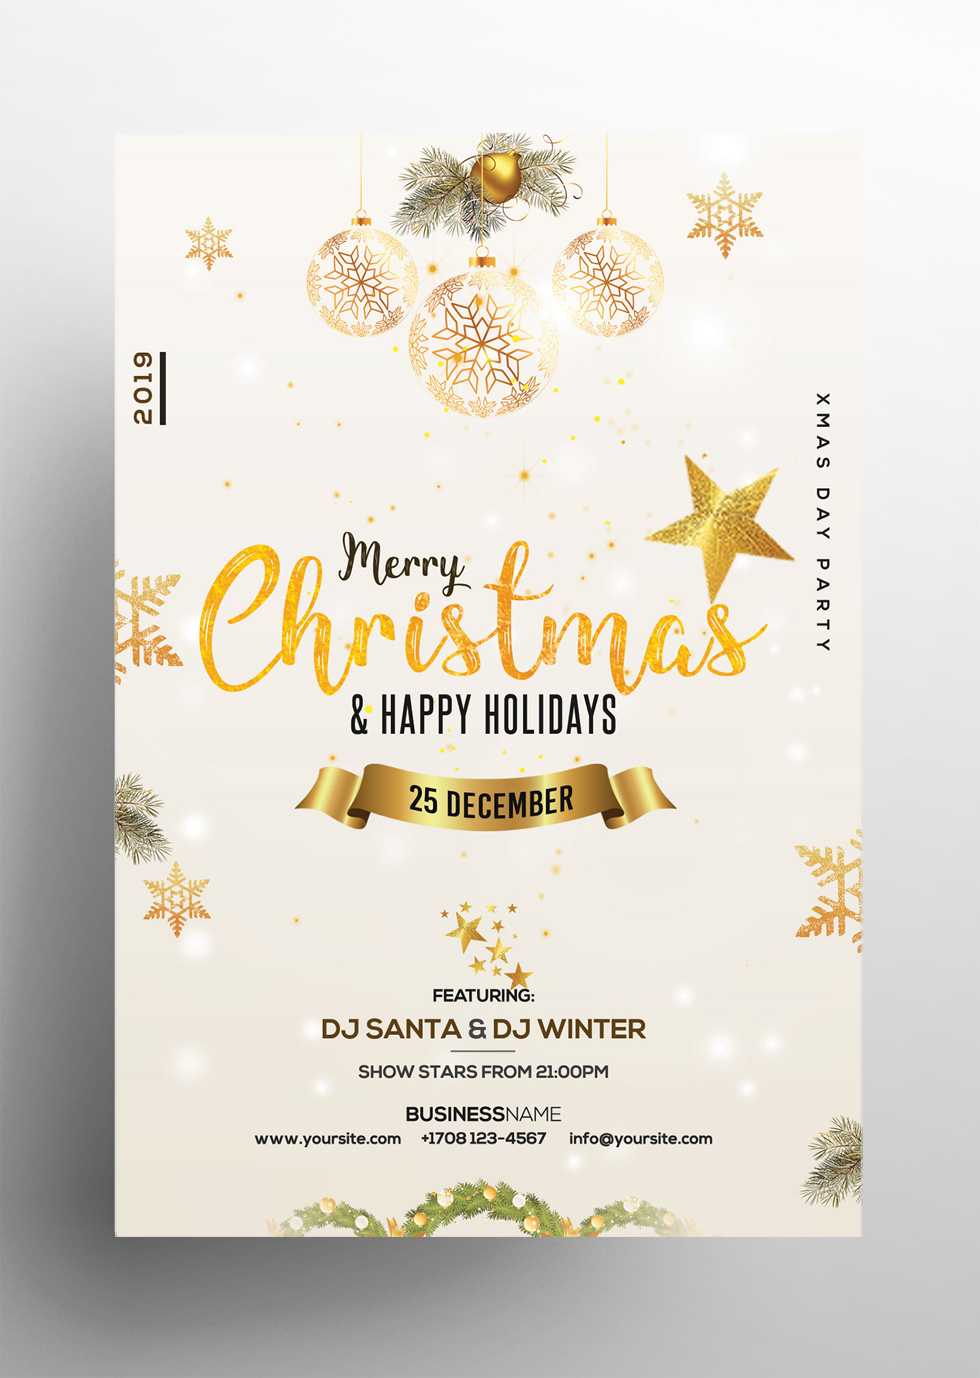 Christmas & Holiday – Free Invitation & Flyer Psd Template Regarding Christmas Brochure Templates Free